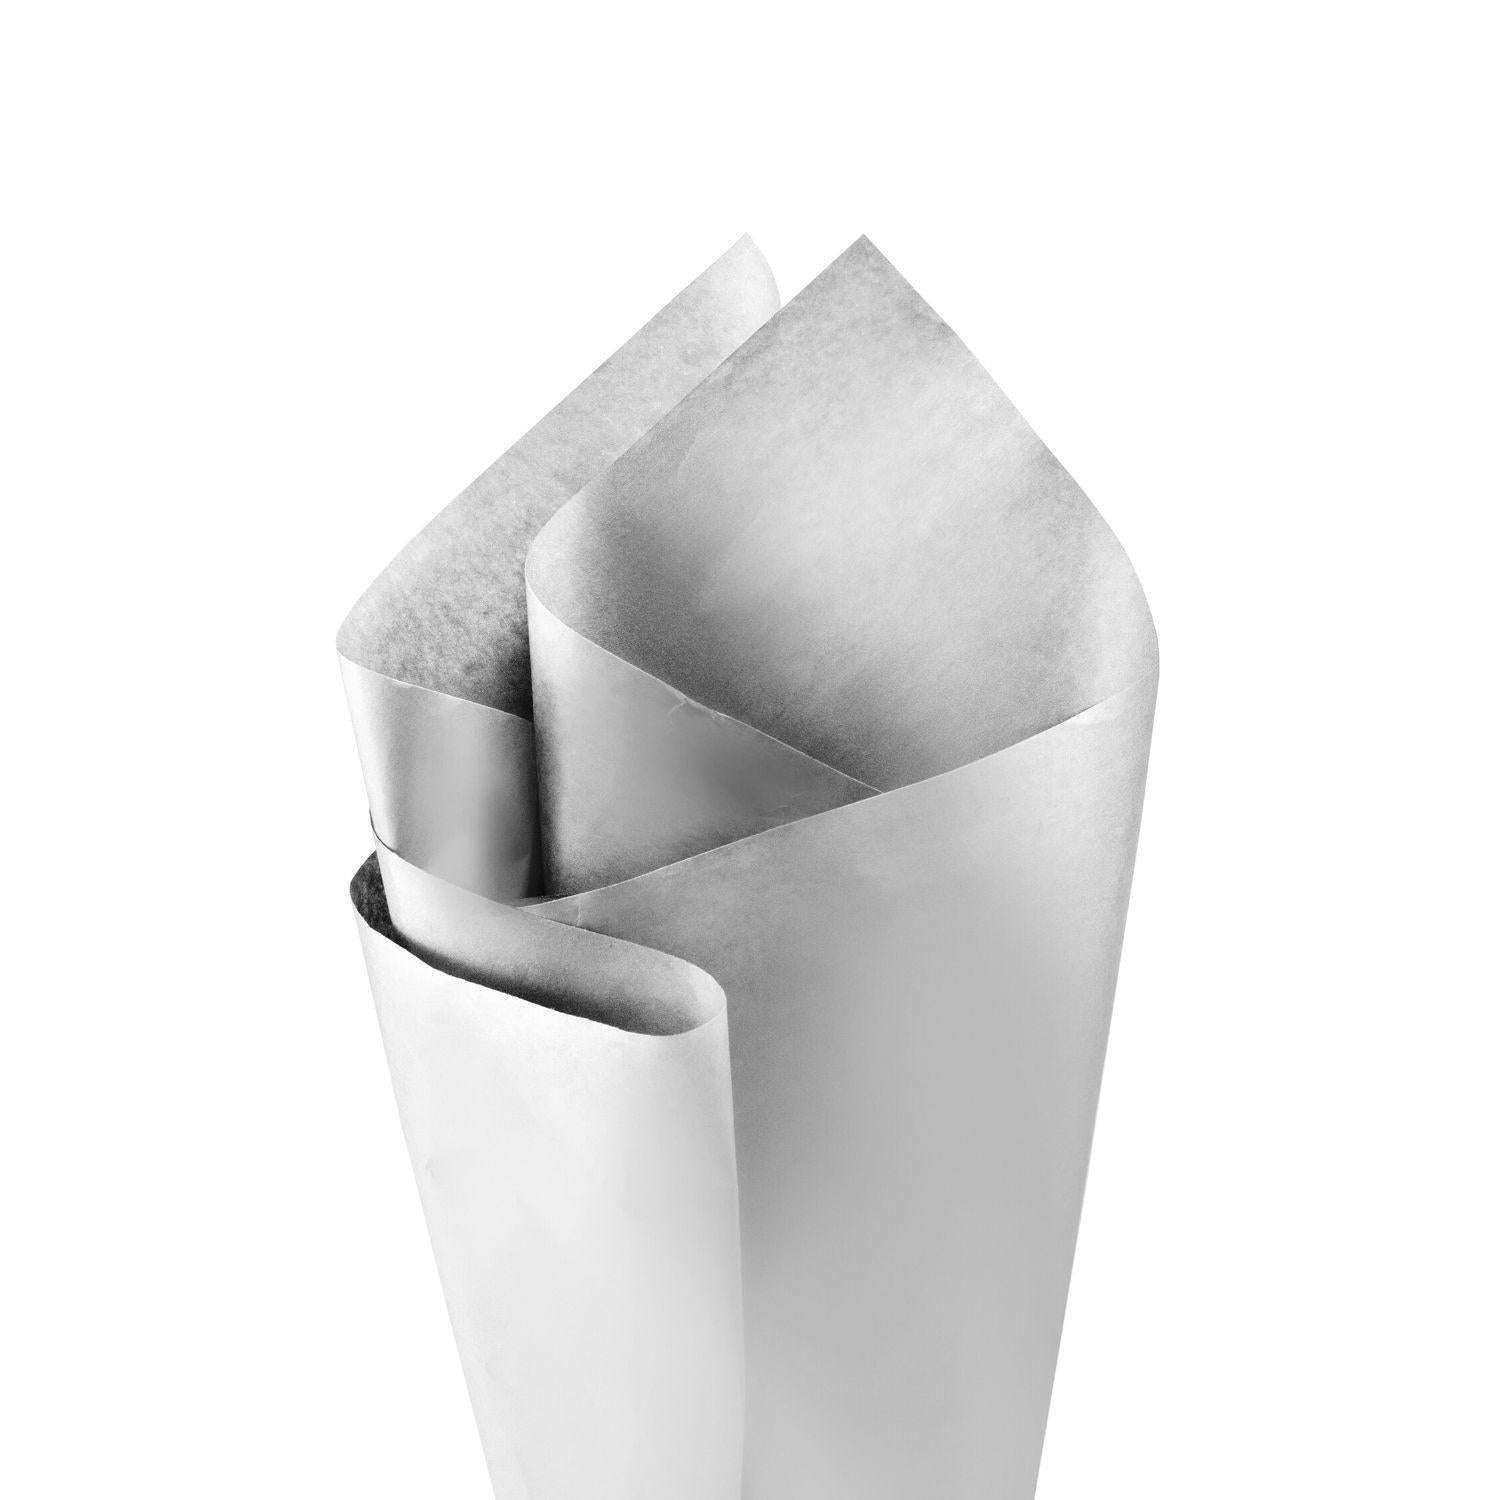 White Tissue Paper Squares, Bulk 24 Sheets, Premium Gift Wrap and